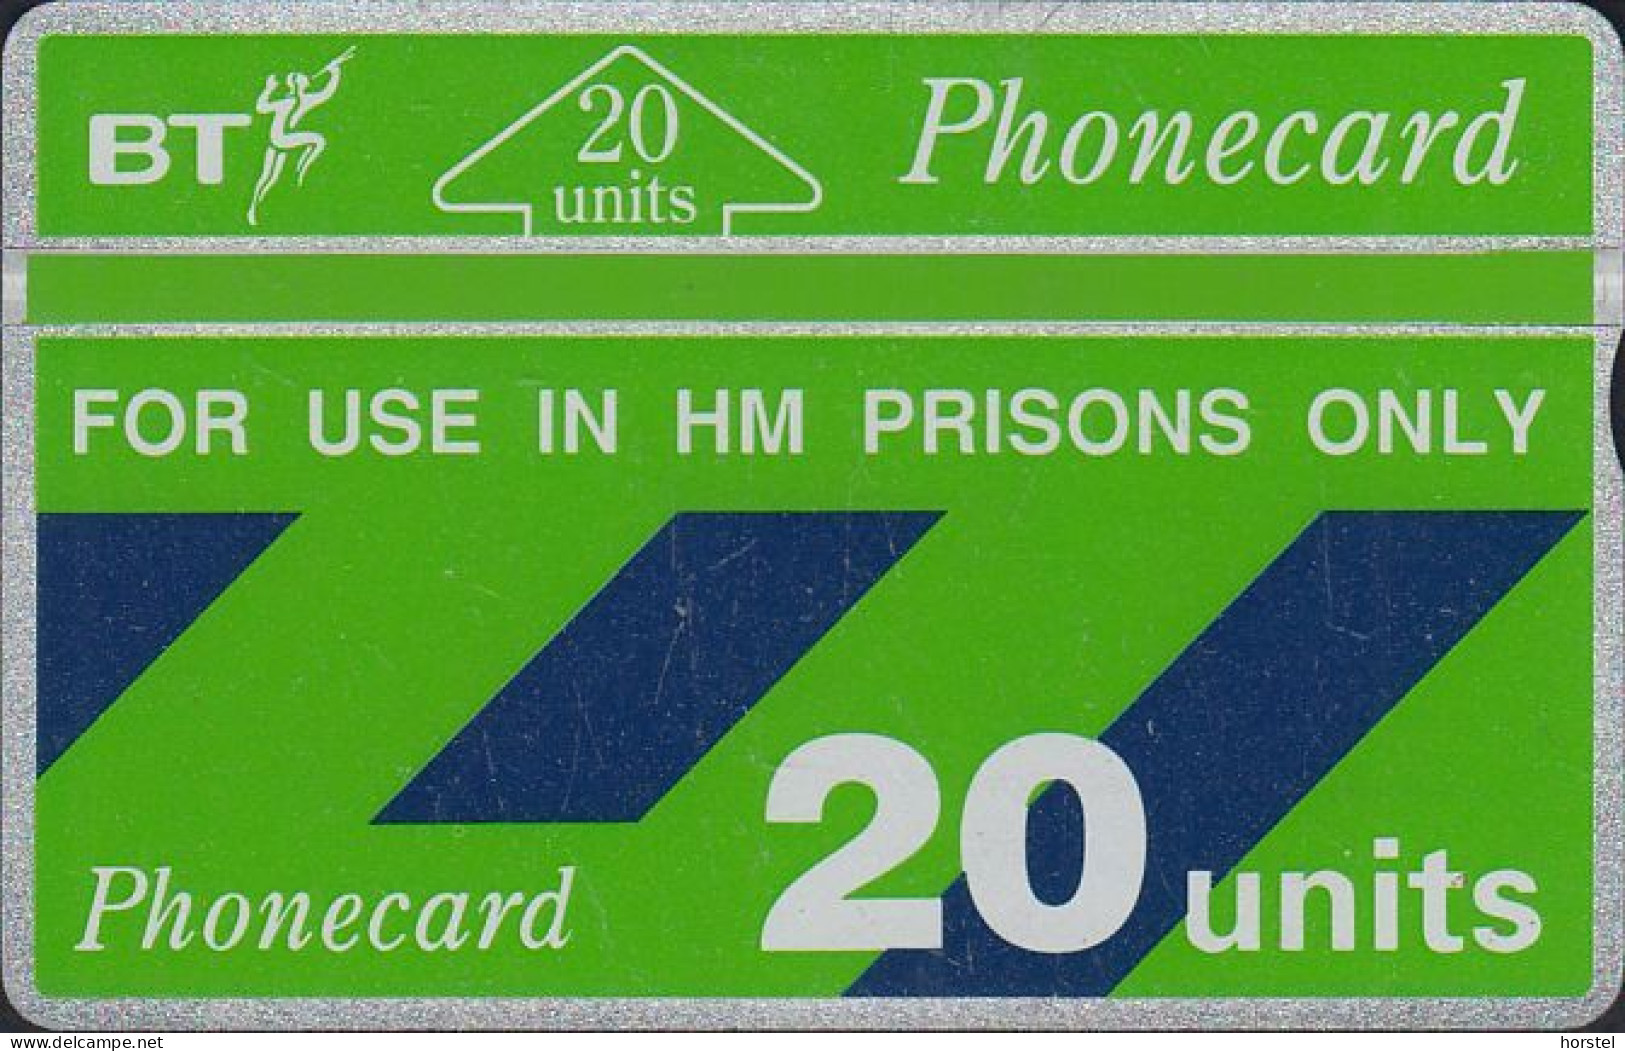 UK - British Telecom L&G H.M. Prison Card CUP004A  (127B)  20 Units - Prisons